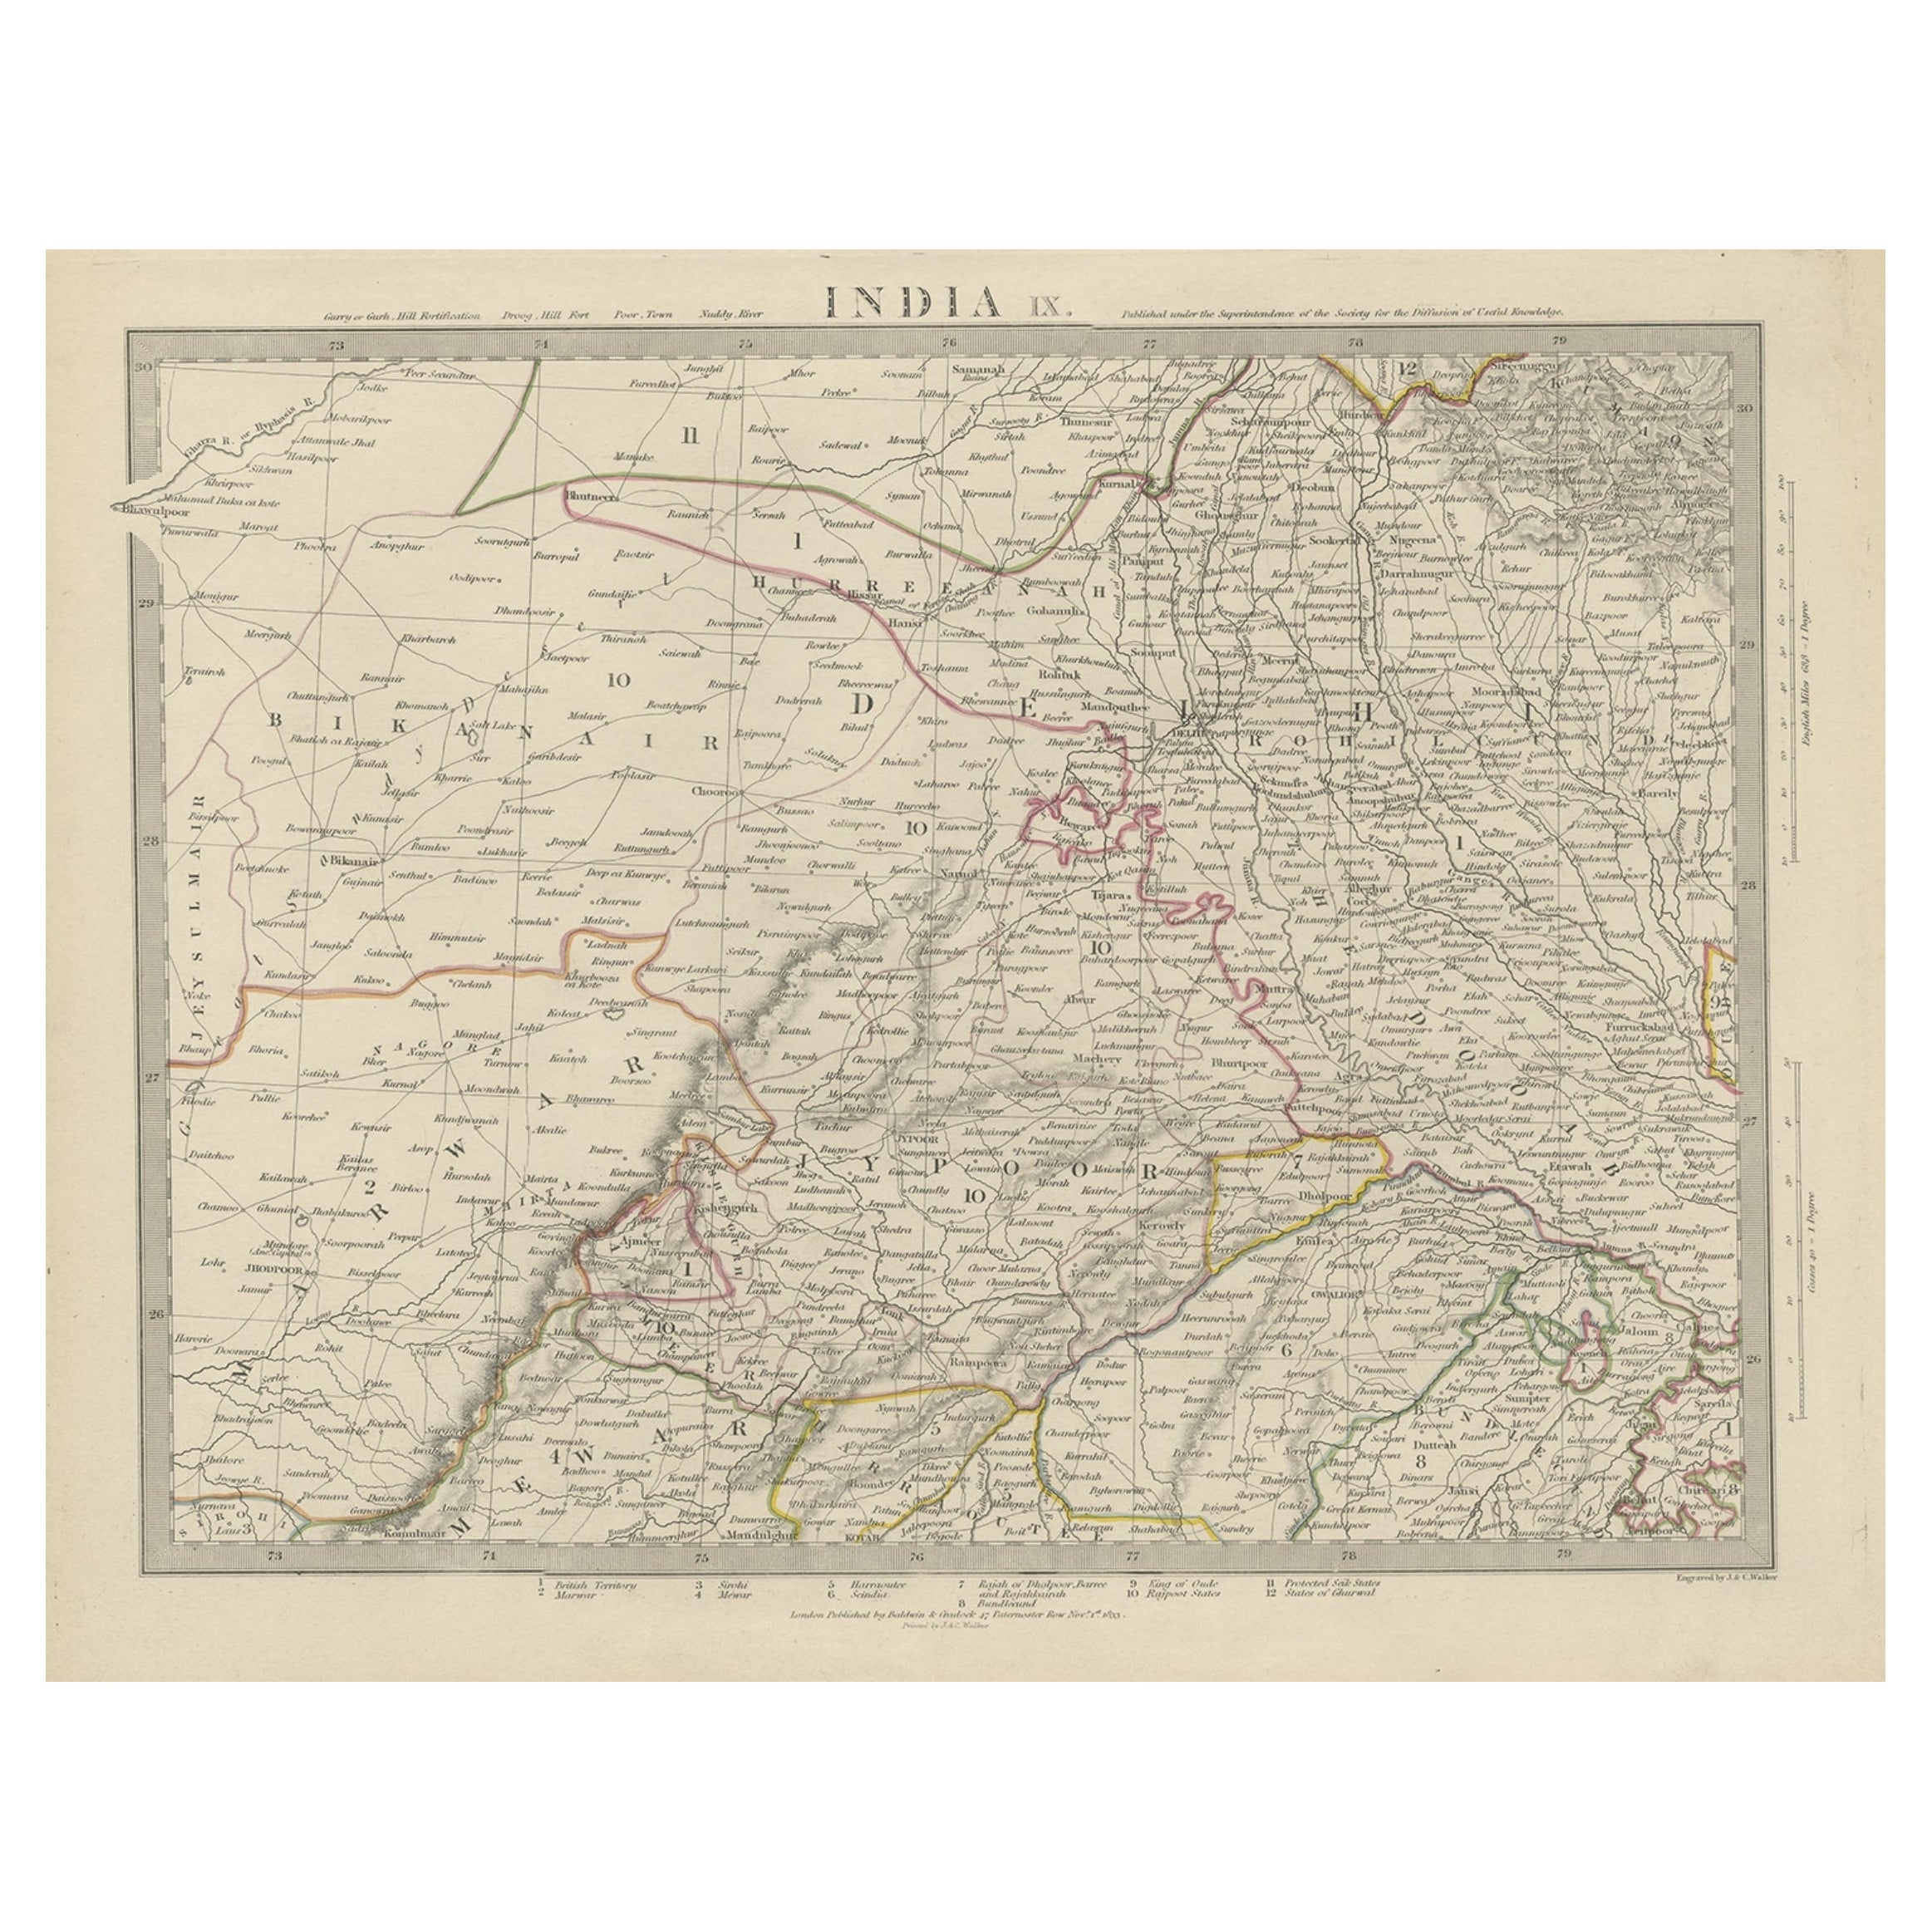 Carte ancienne de la région de Delhi en Inde, 1833